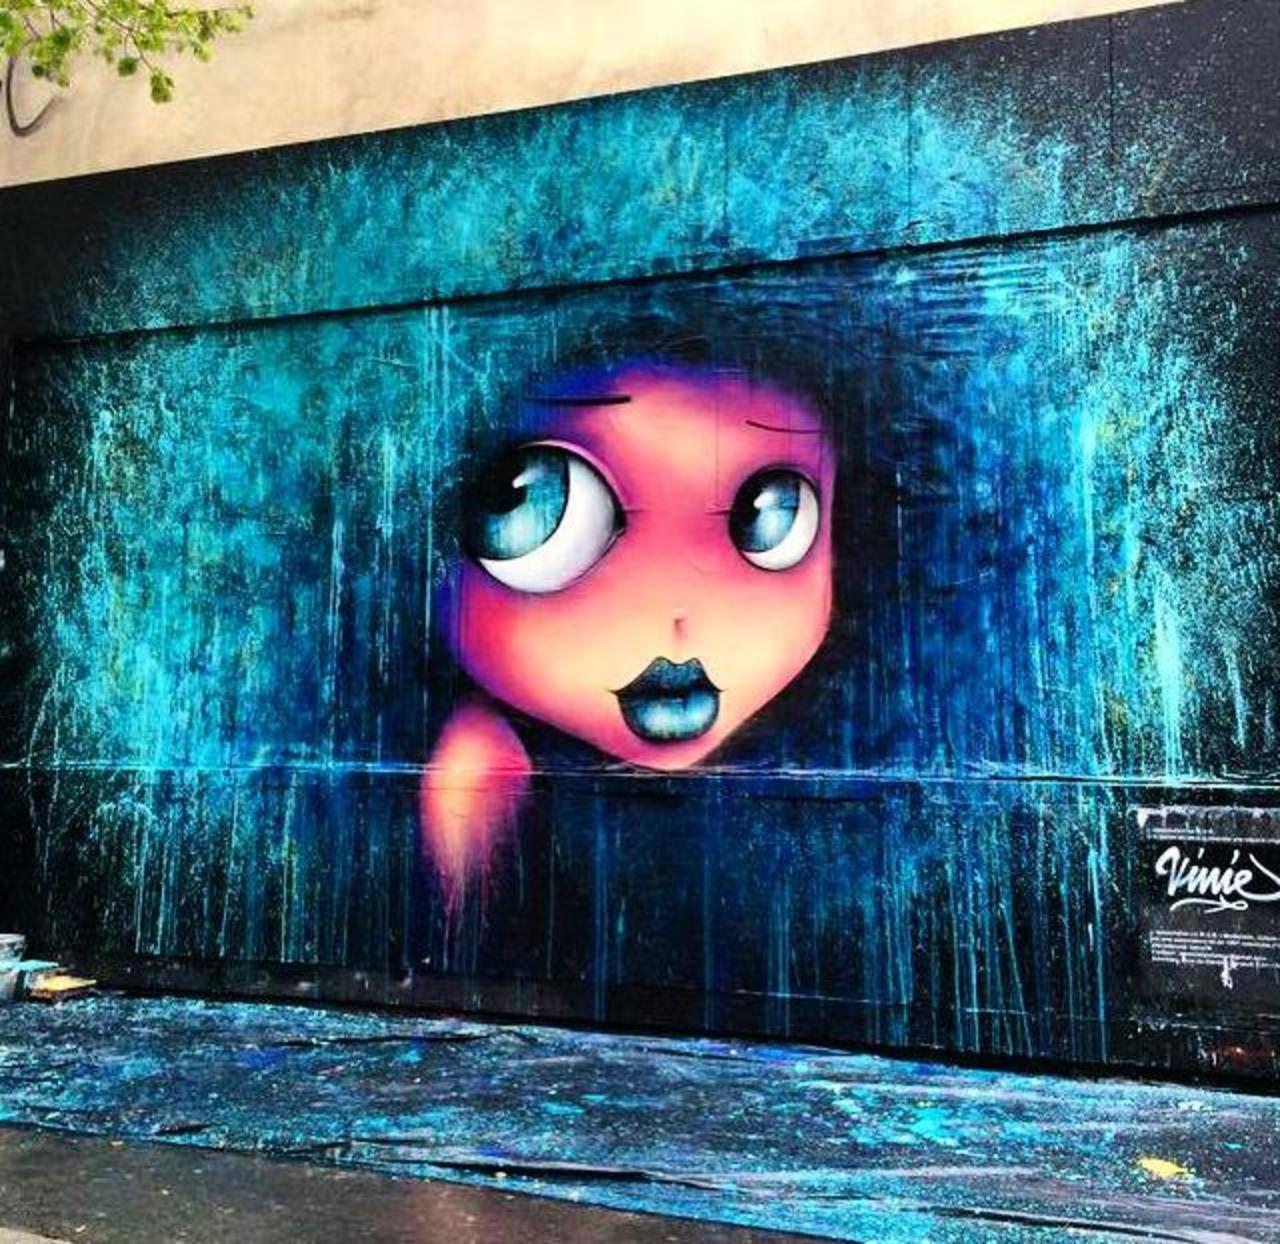 New Street Art by VinieGraffiti in Paris

#art #arte #graffiti #streetart http://t.co/mCCMBt5MyZ